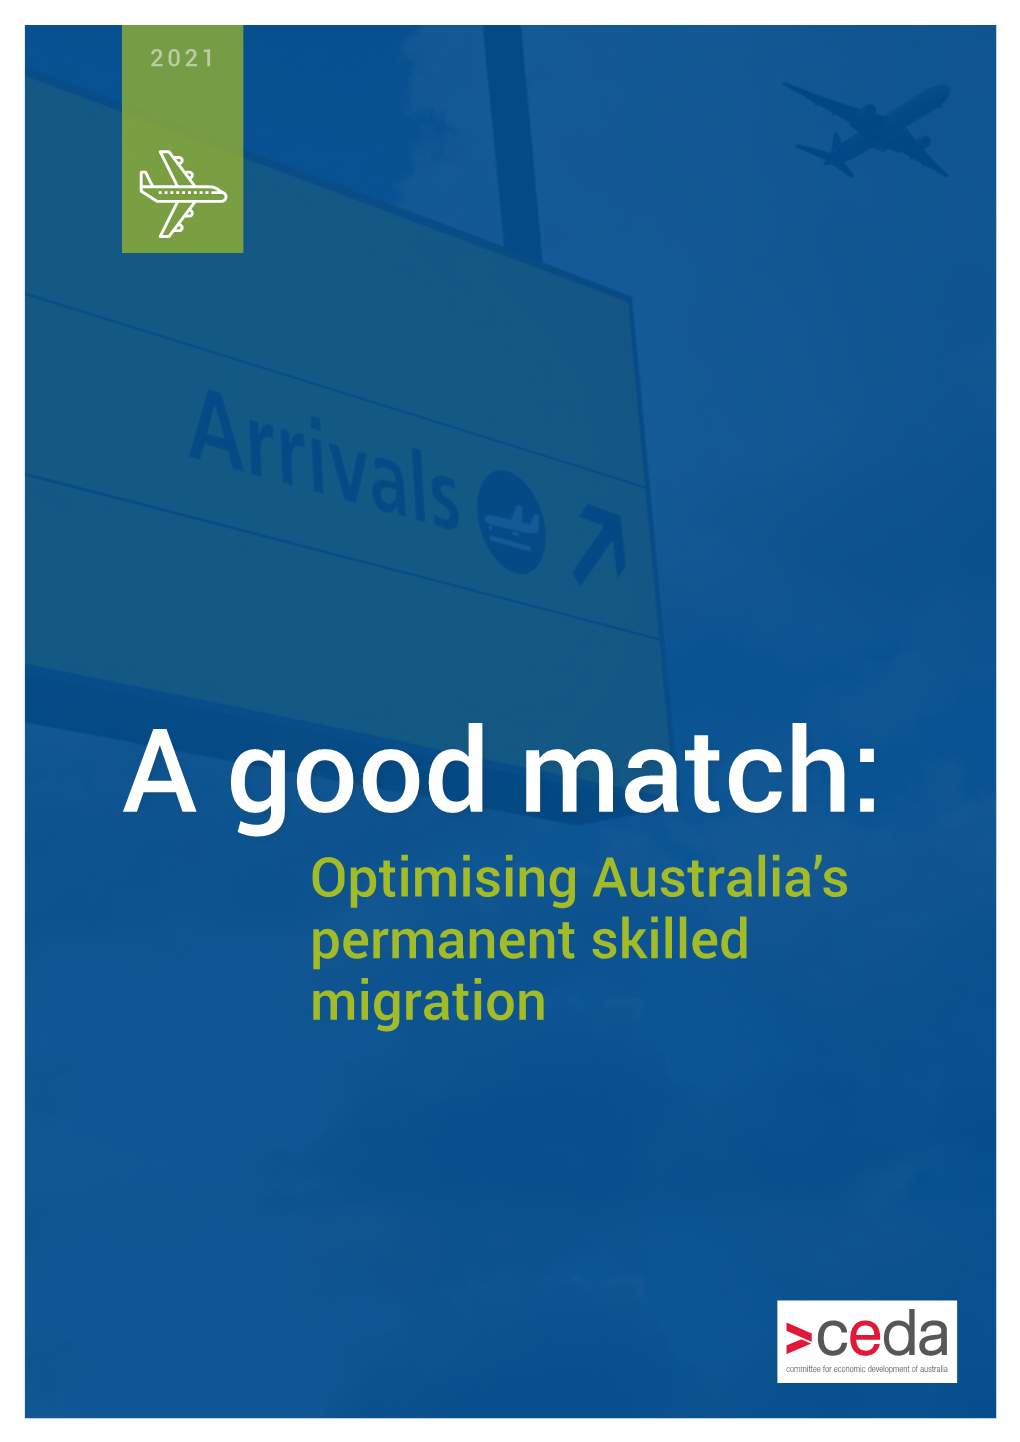 Optimising Australia's Permanent Skilled Migration